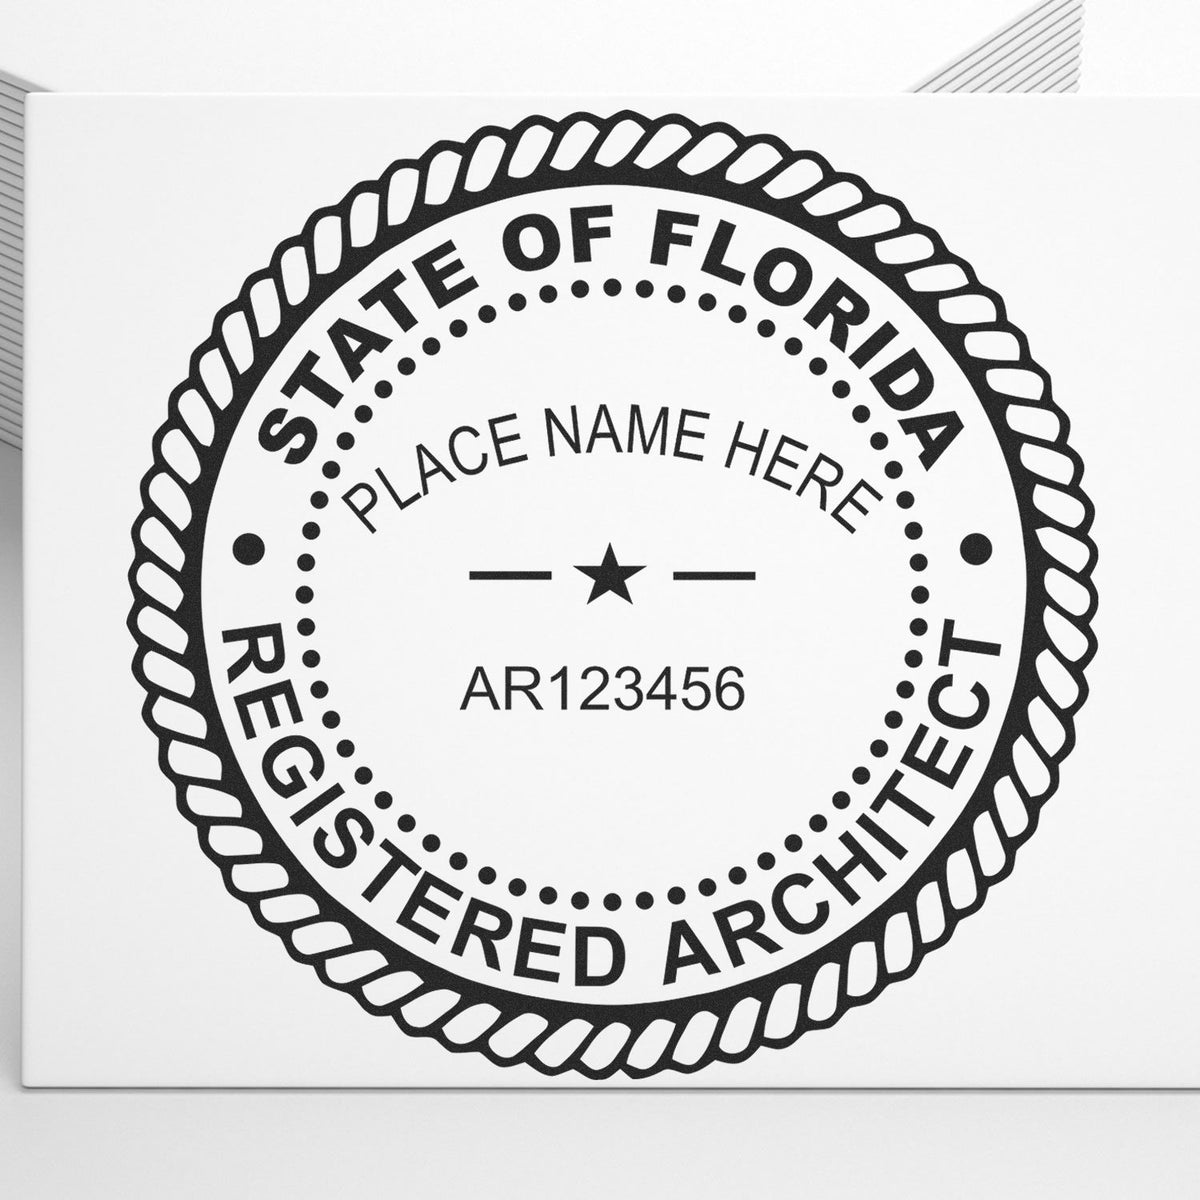 Florida Architect Seal Stamp Lifestyle Photo